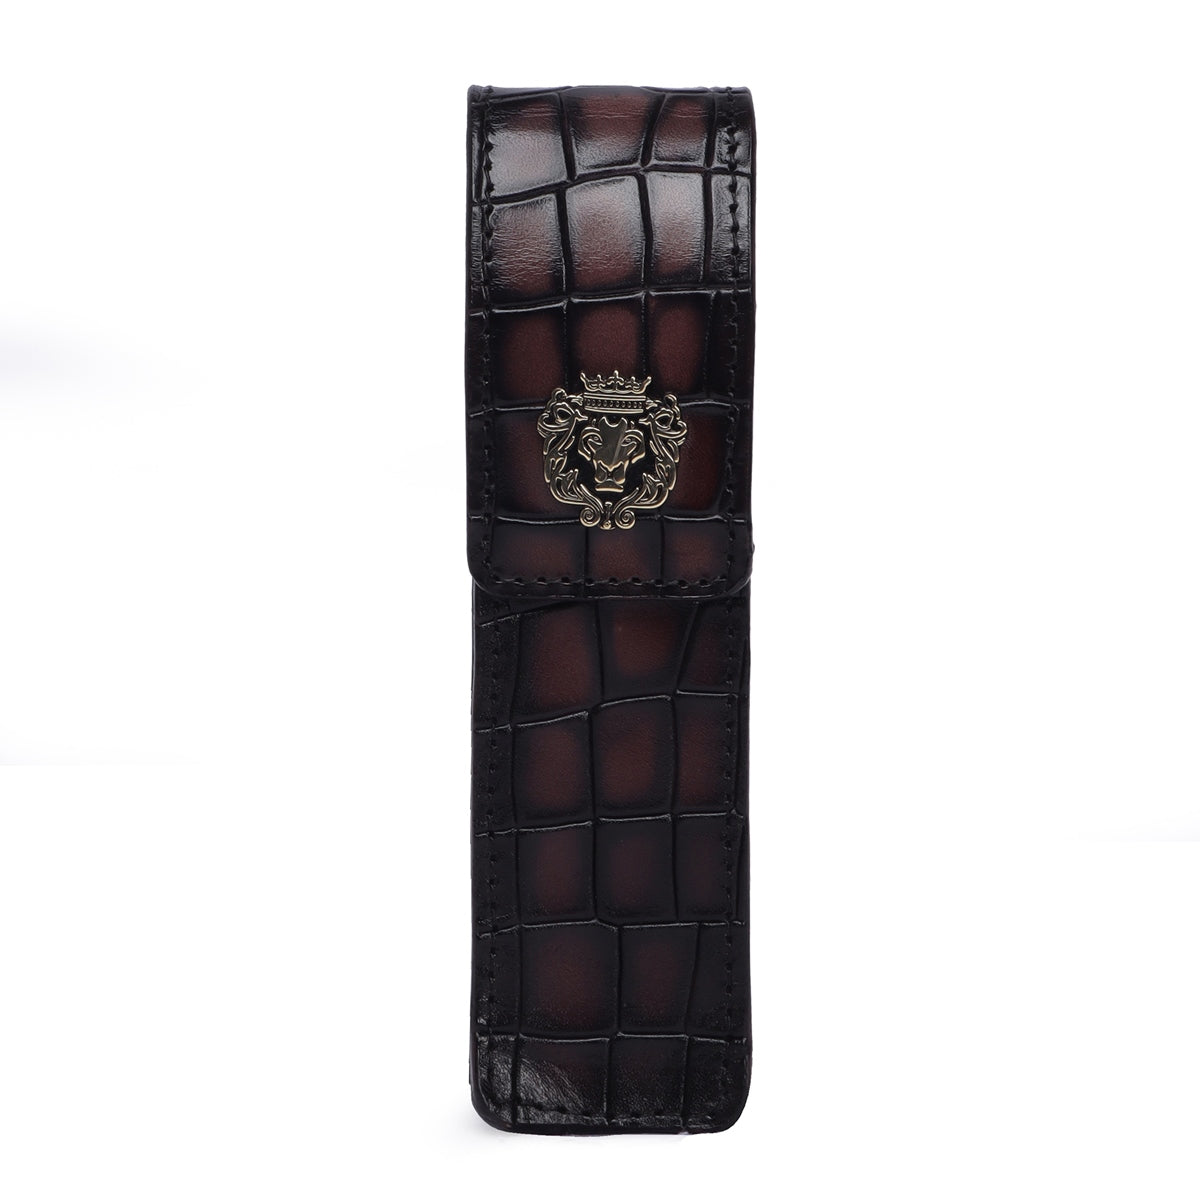 Smokey Dark Brown Cut Croco Textured Leather Pen Holder with Metal Lion Logo By Brune & Bareskin